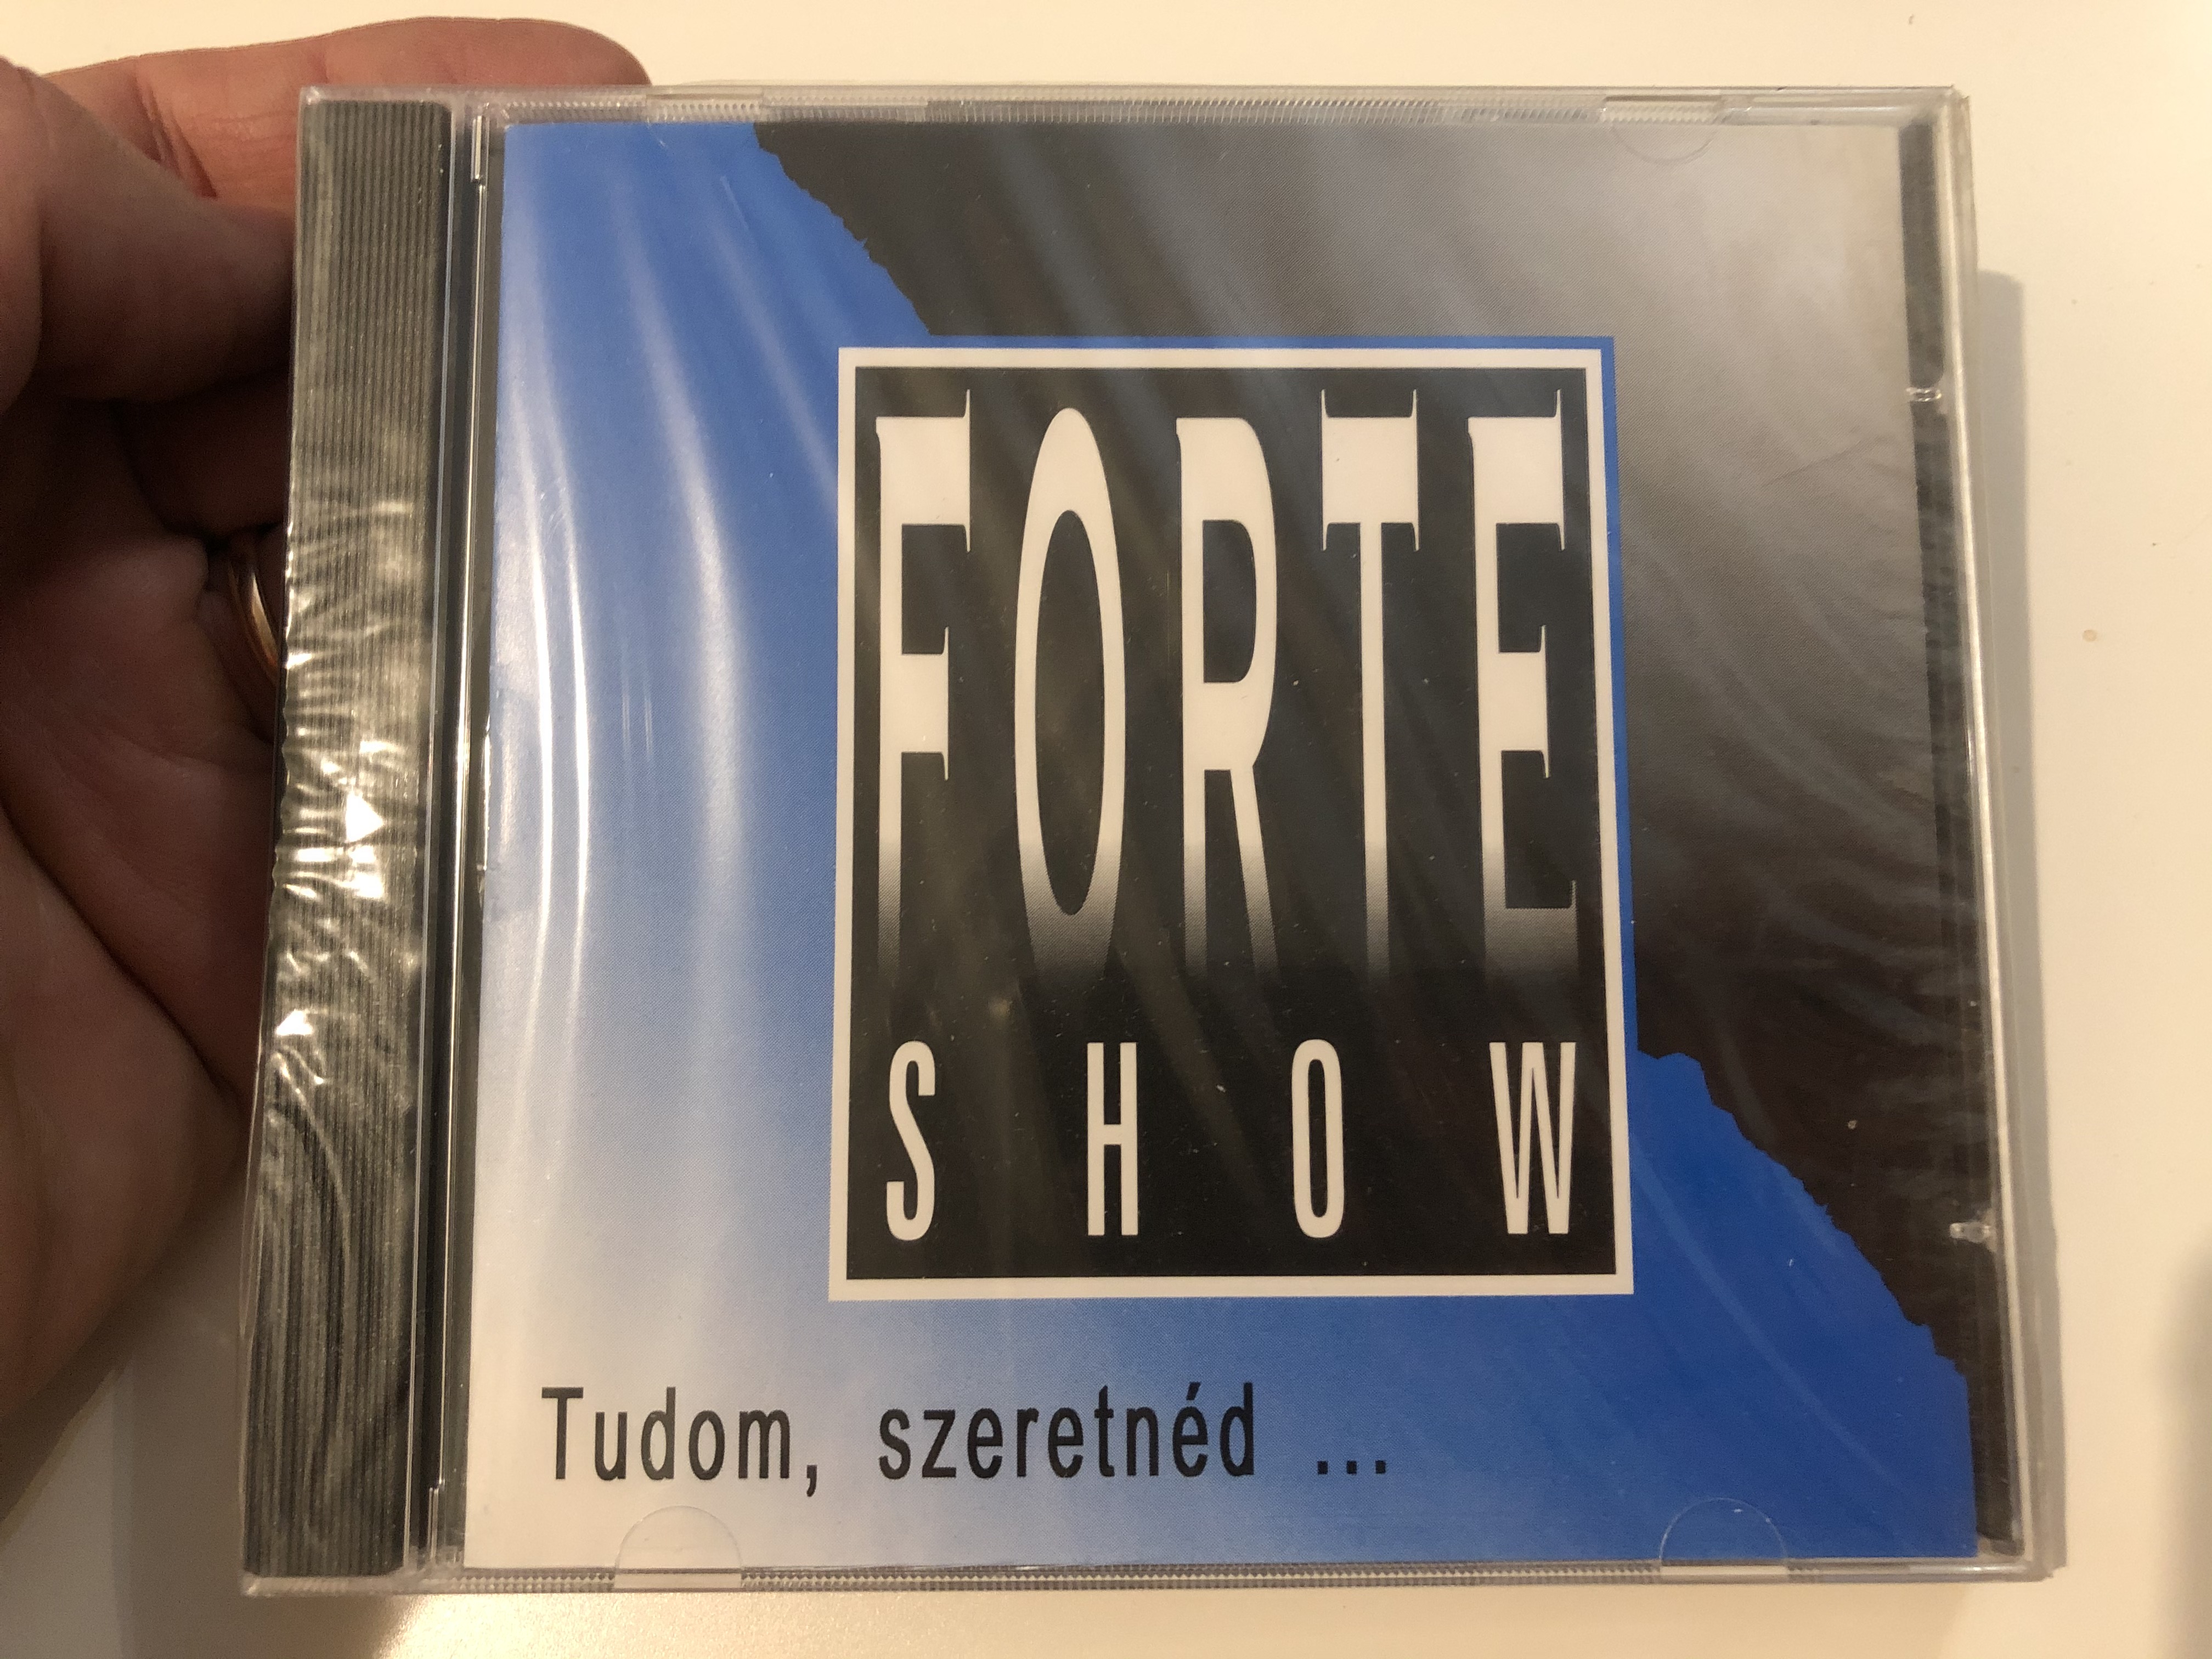 forte-show-tudom-szeretn-d...-audio-cd-1997-fs-001-1-.jpg